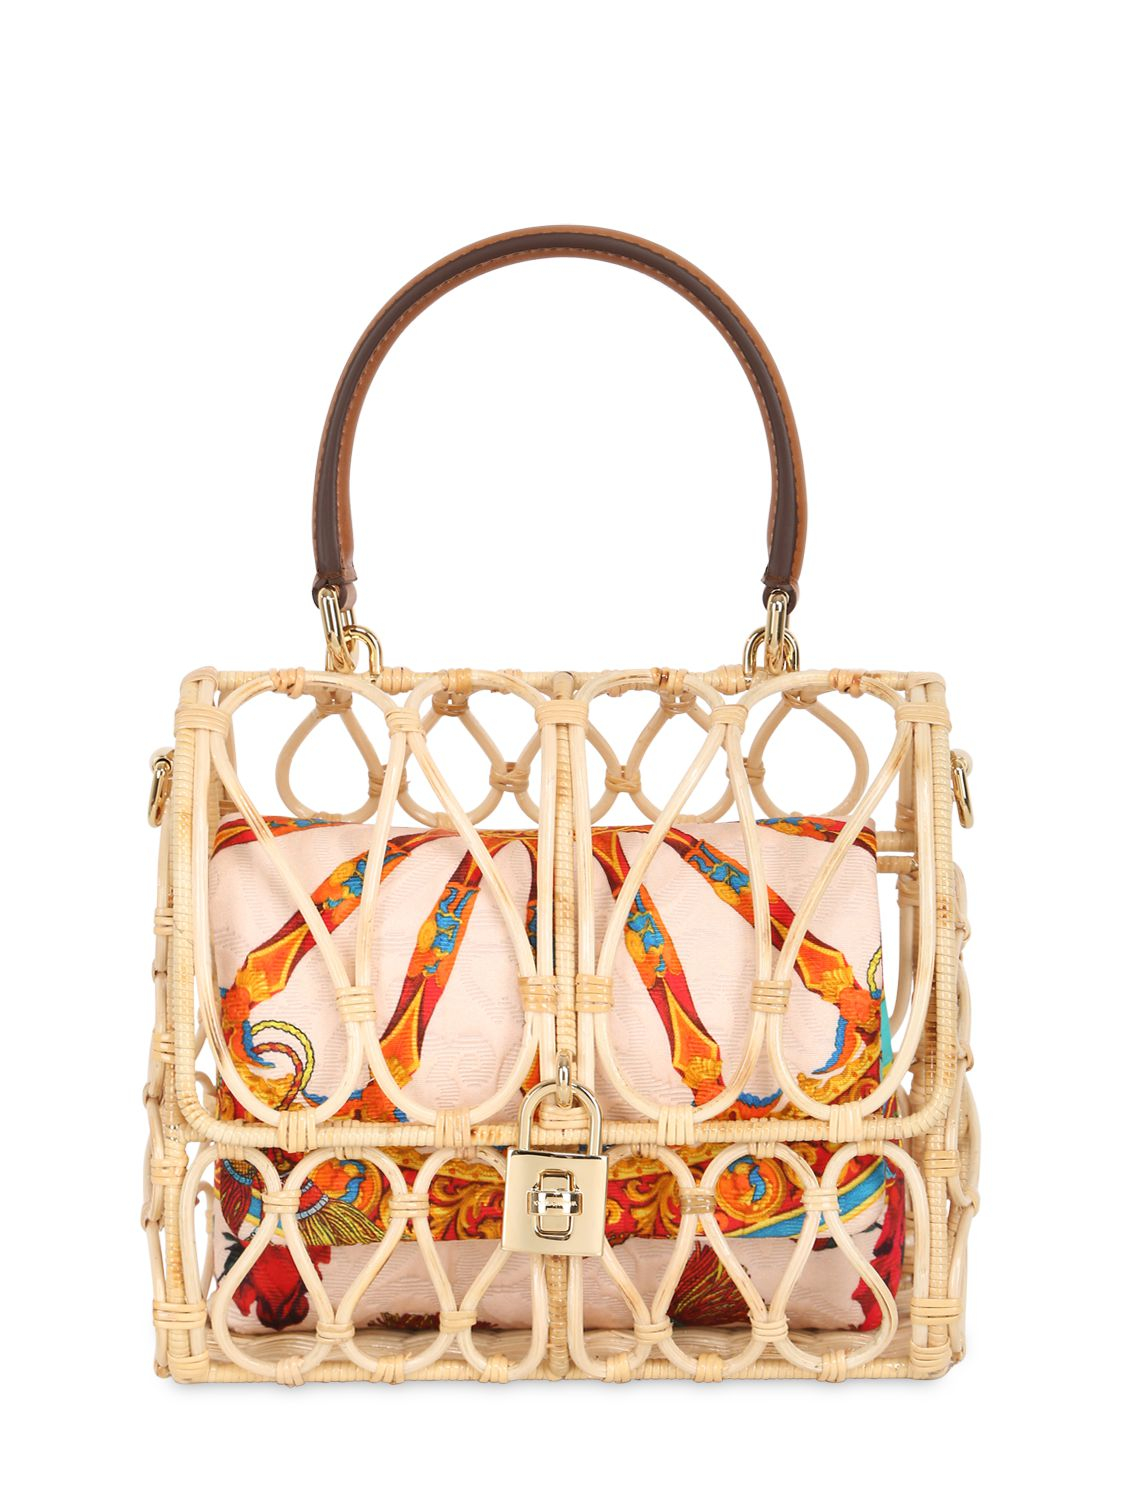 Dolce & Gabbana Dolce Bag Rattan Top Handle Bag in Beige (NATURAL) | Lyst